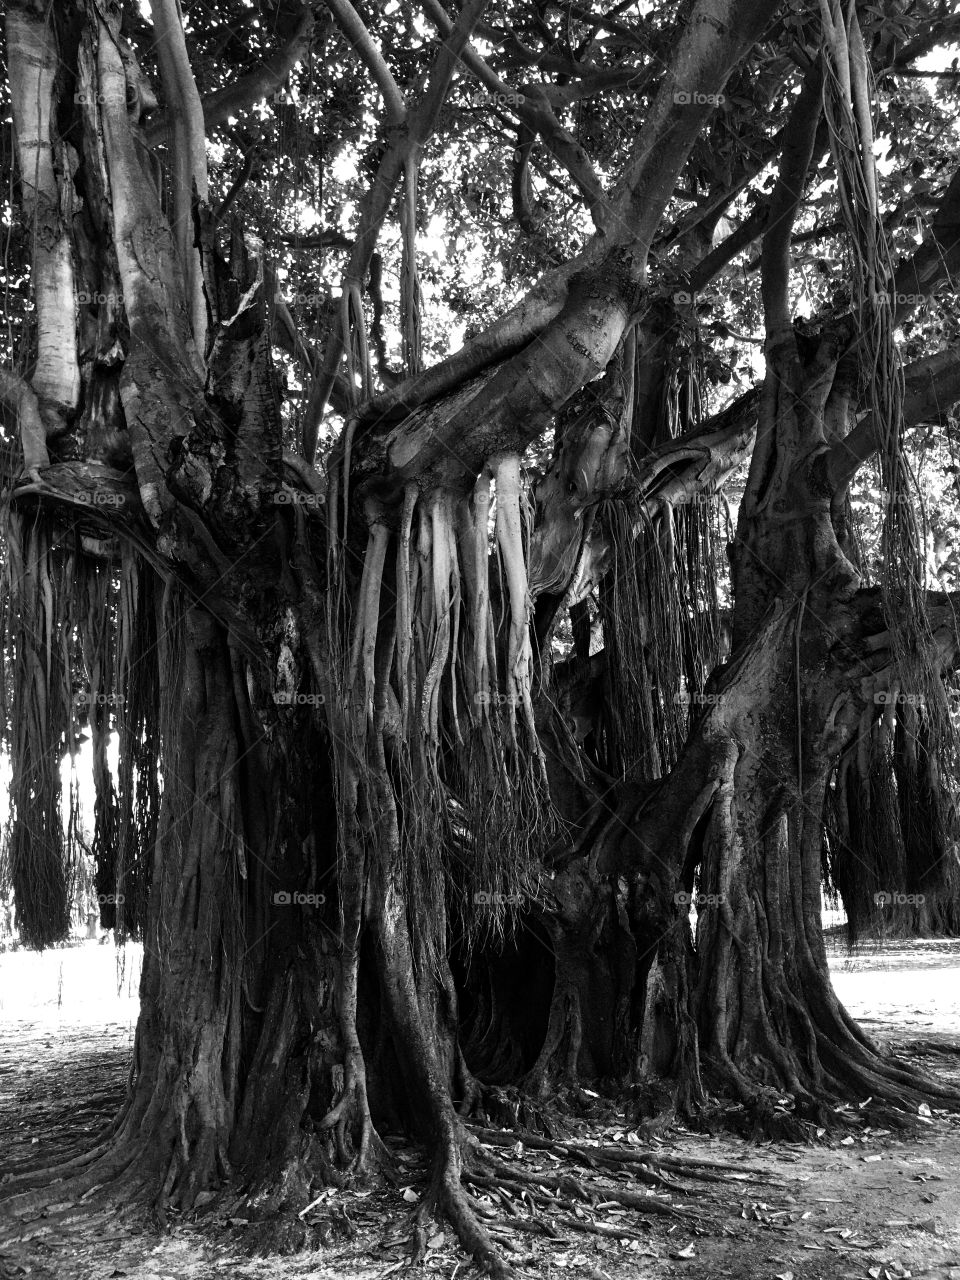 Scary Banyan tree